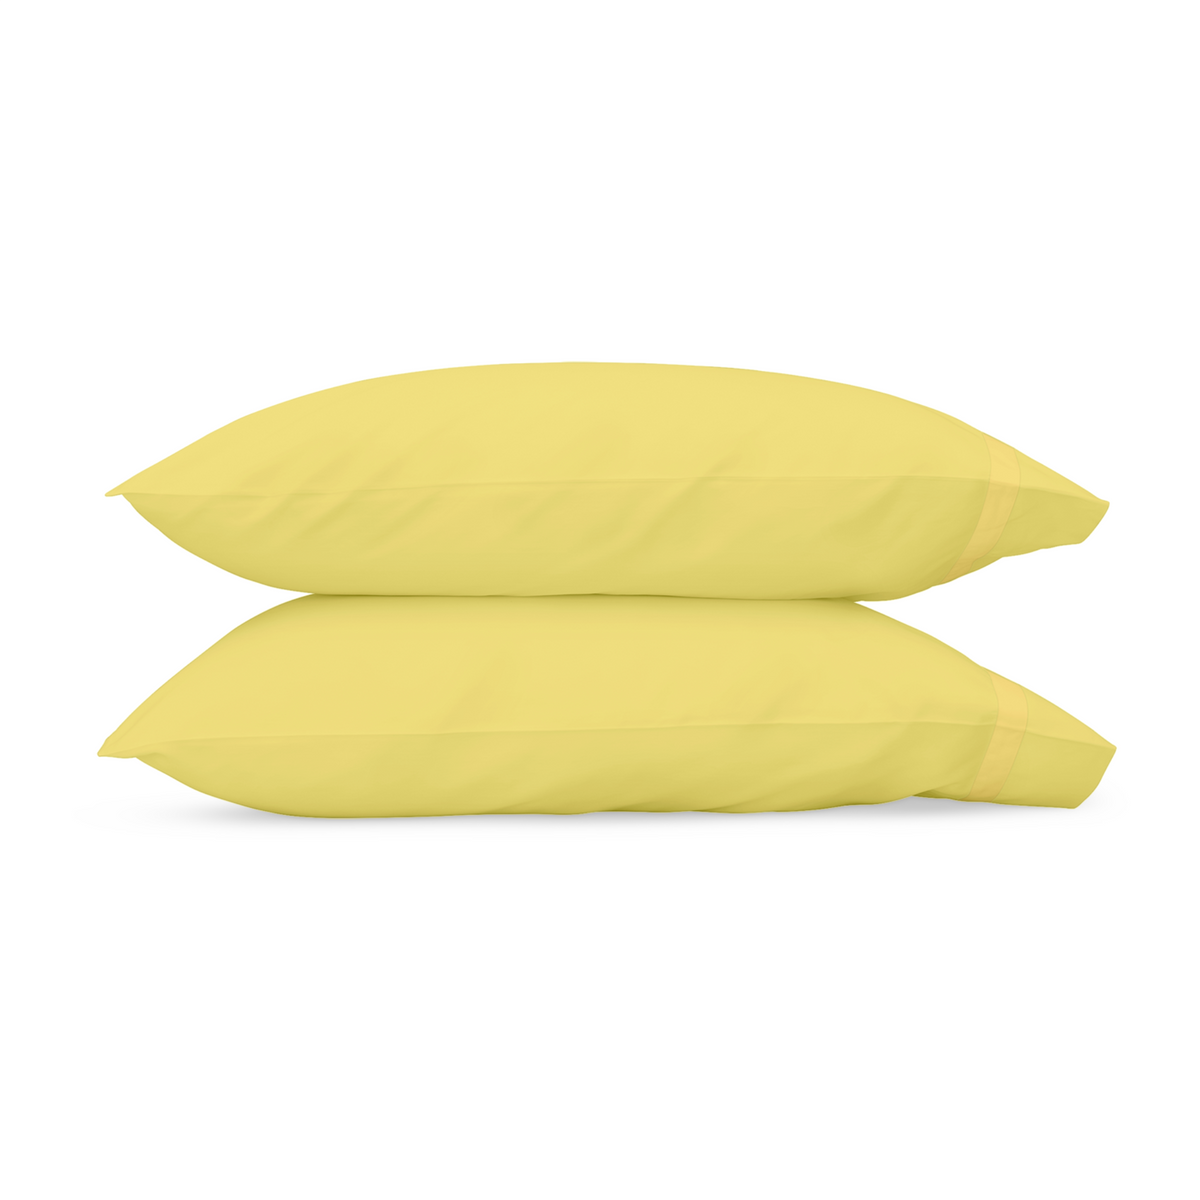 Pair of Pillowcases of Matouk Nocturne Bedding in Lemon Color